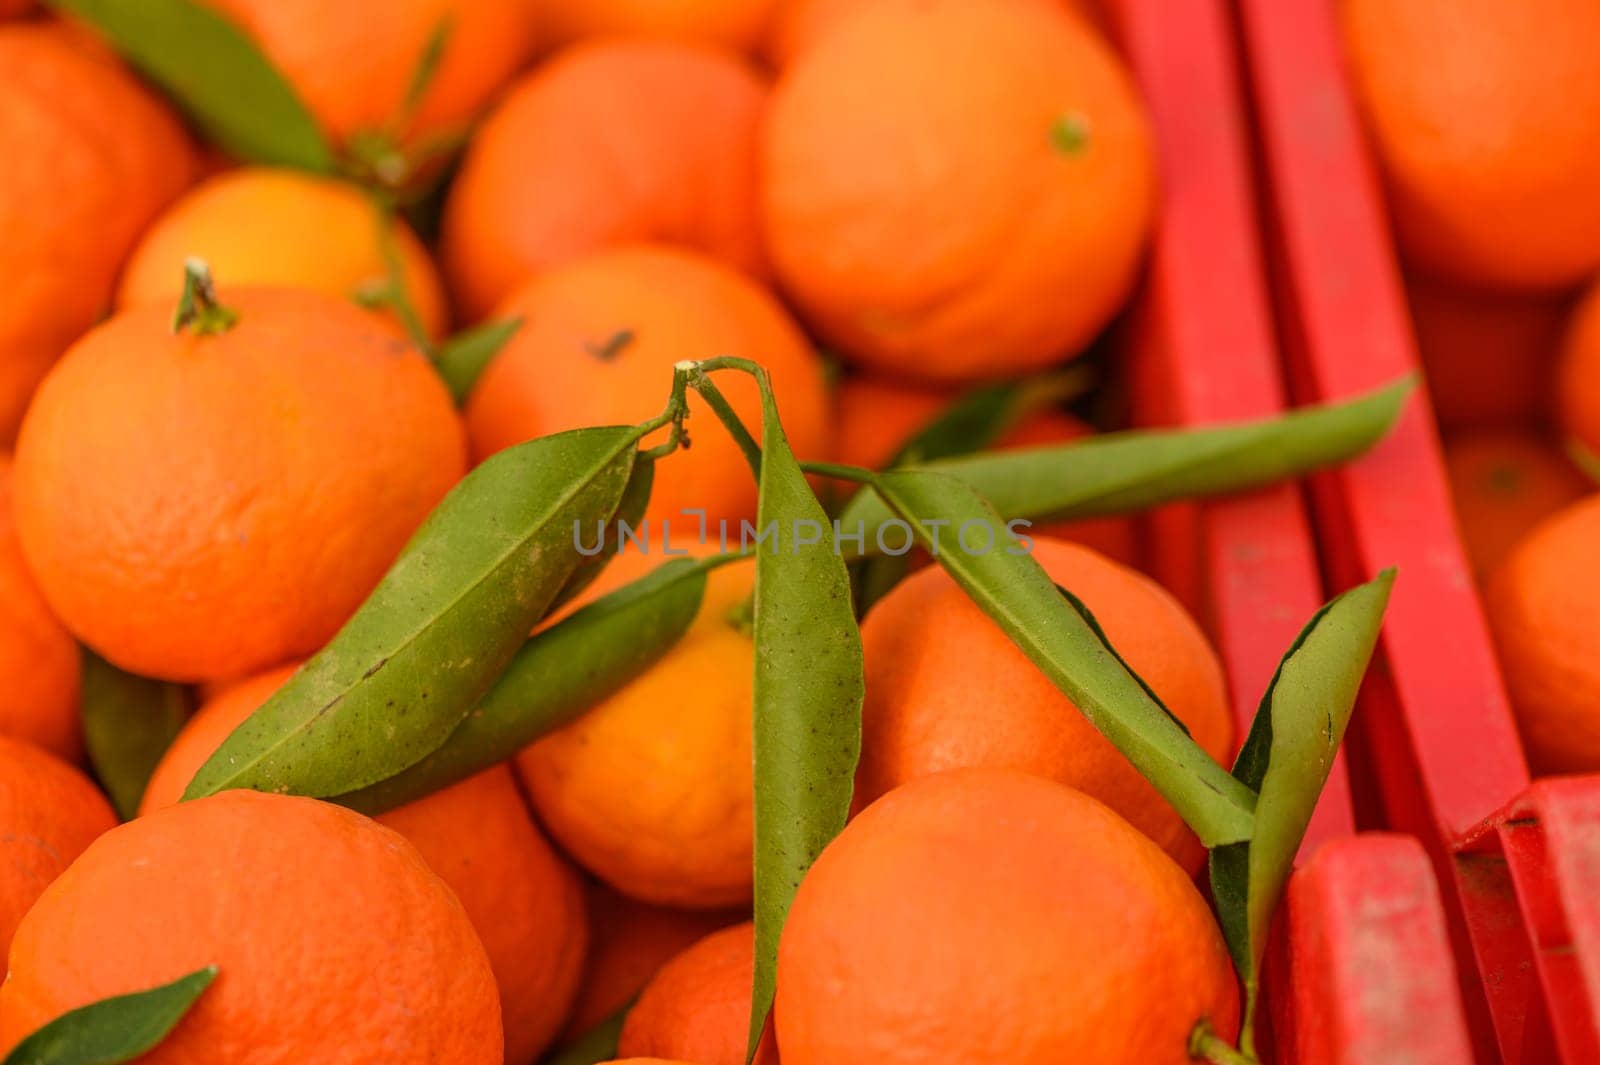 juicy fresh tangerines in boxes for sale in Cyprus in winter 17